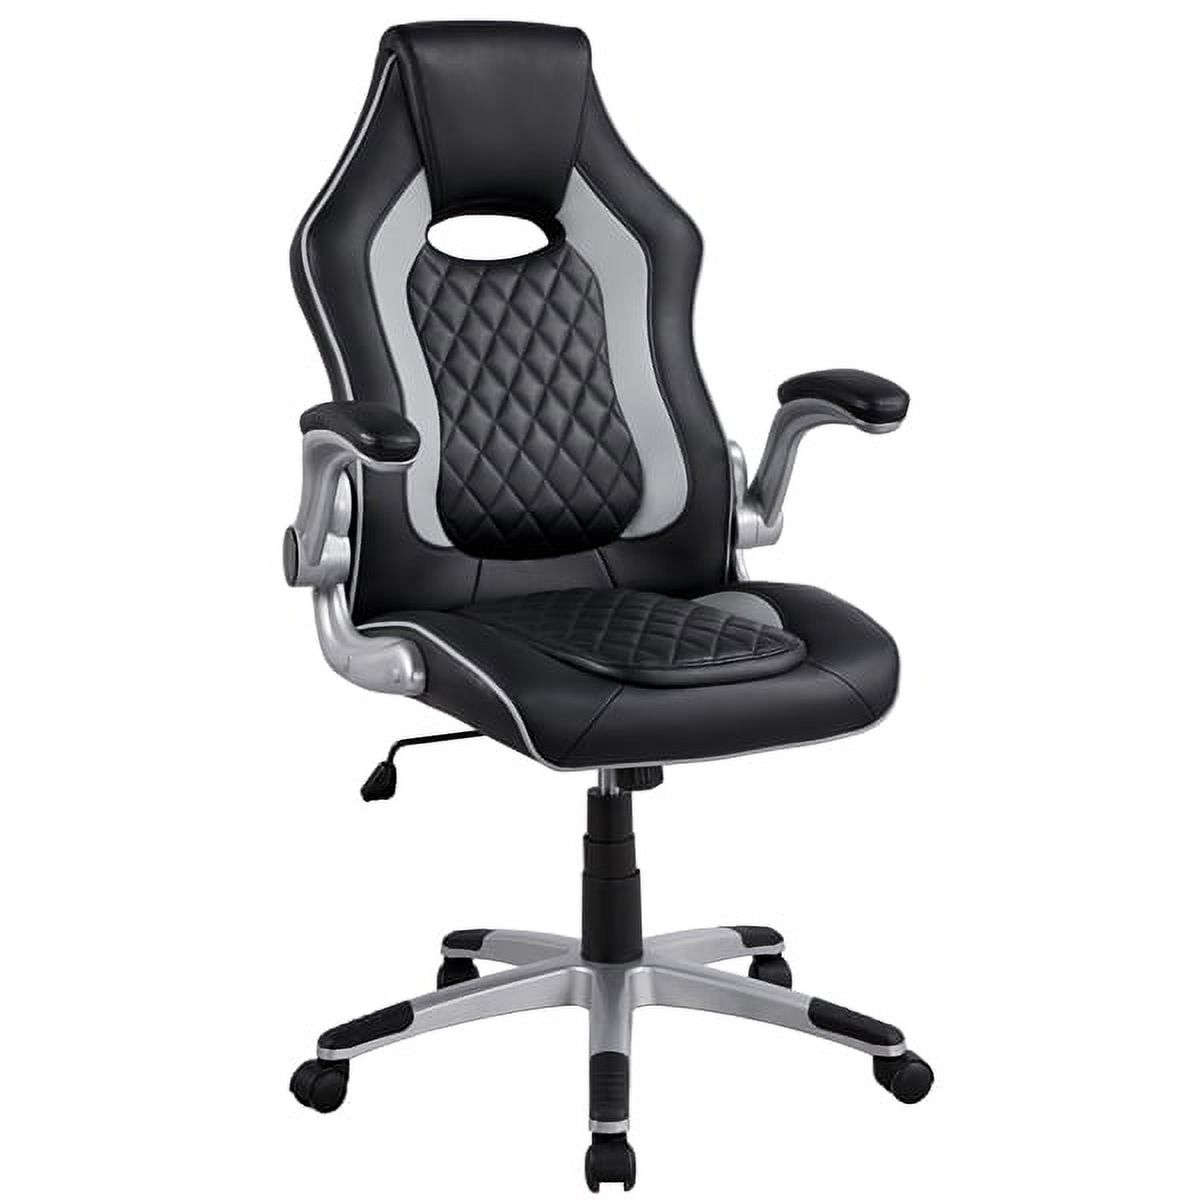 SmileMart Adjustable Ergonomic High Back Gaming Chair, Black/Gray - image 1 of 13